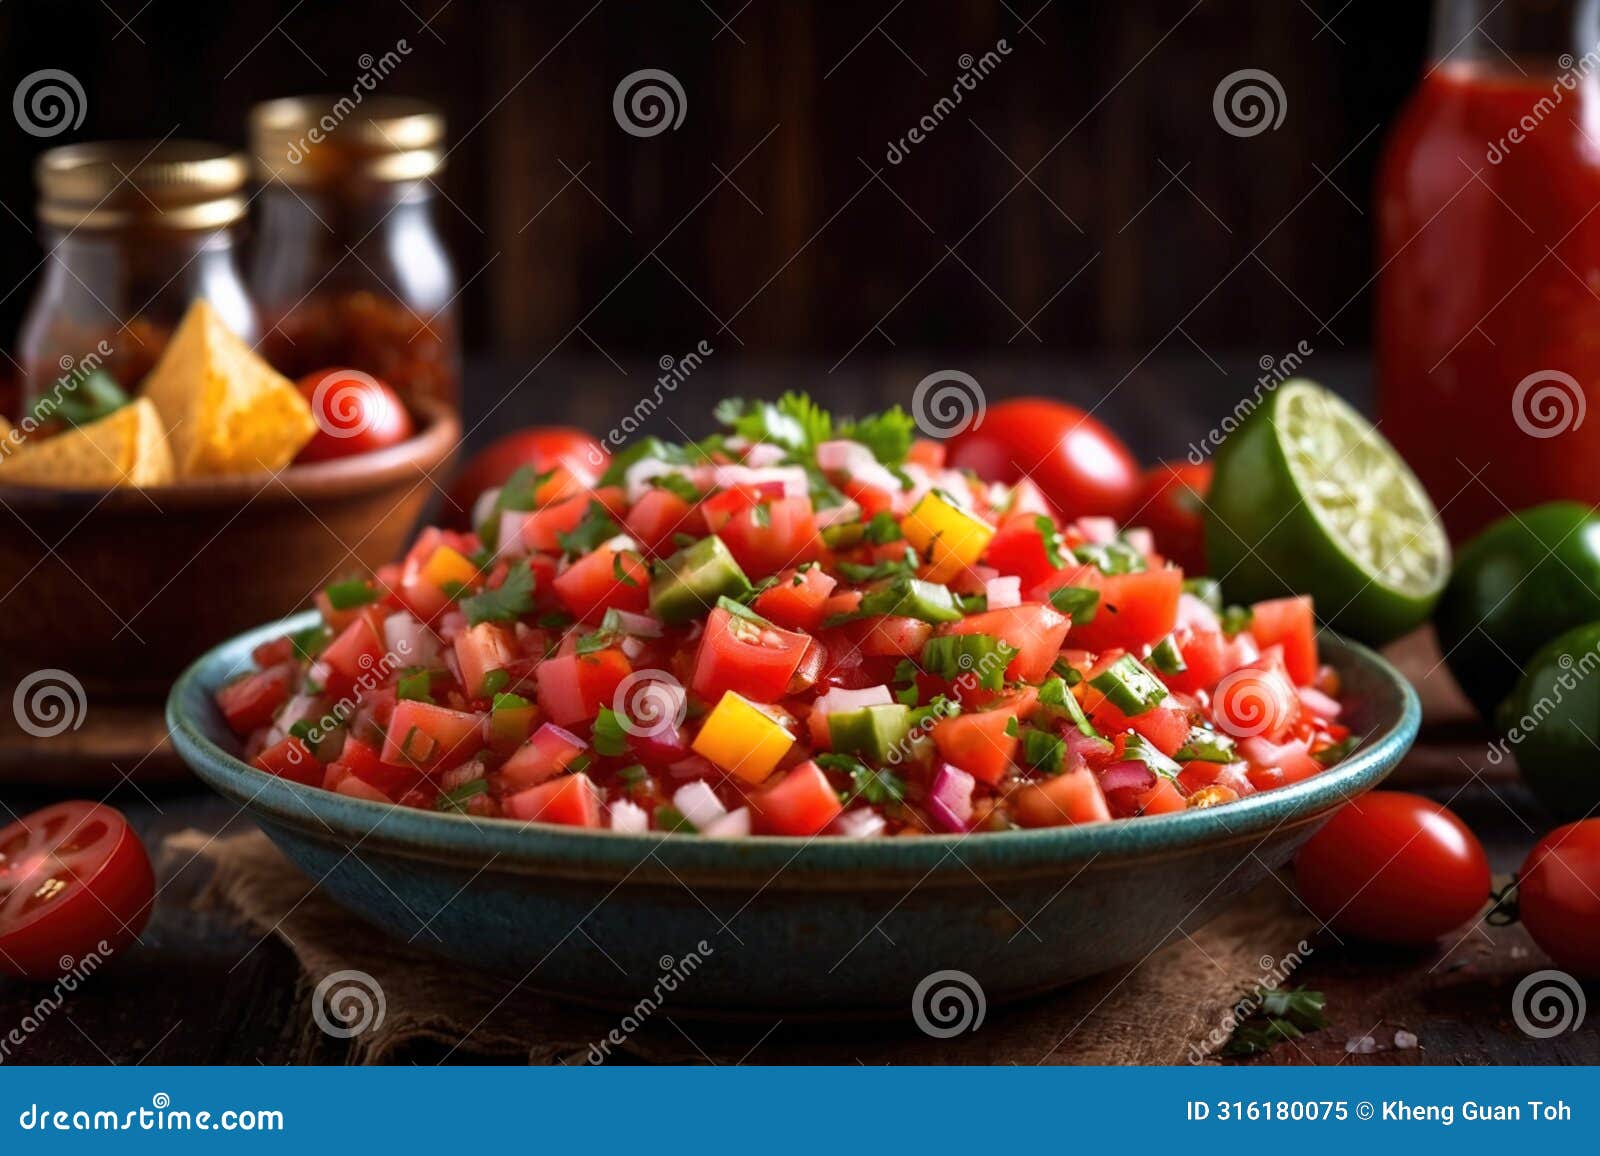 plate of pico de gallo salsa, vegetarian salad sauce cuisine dish